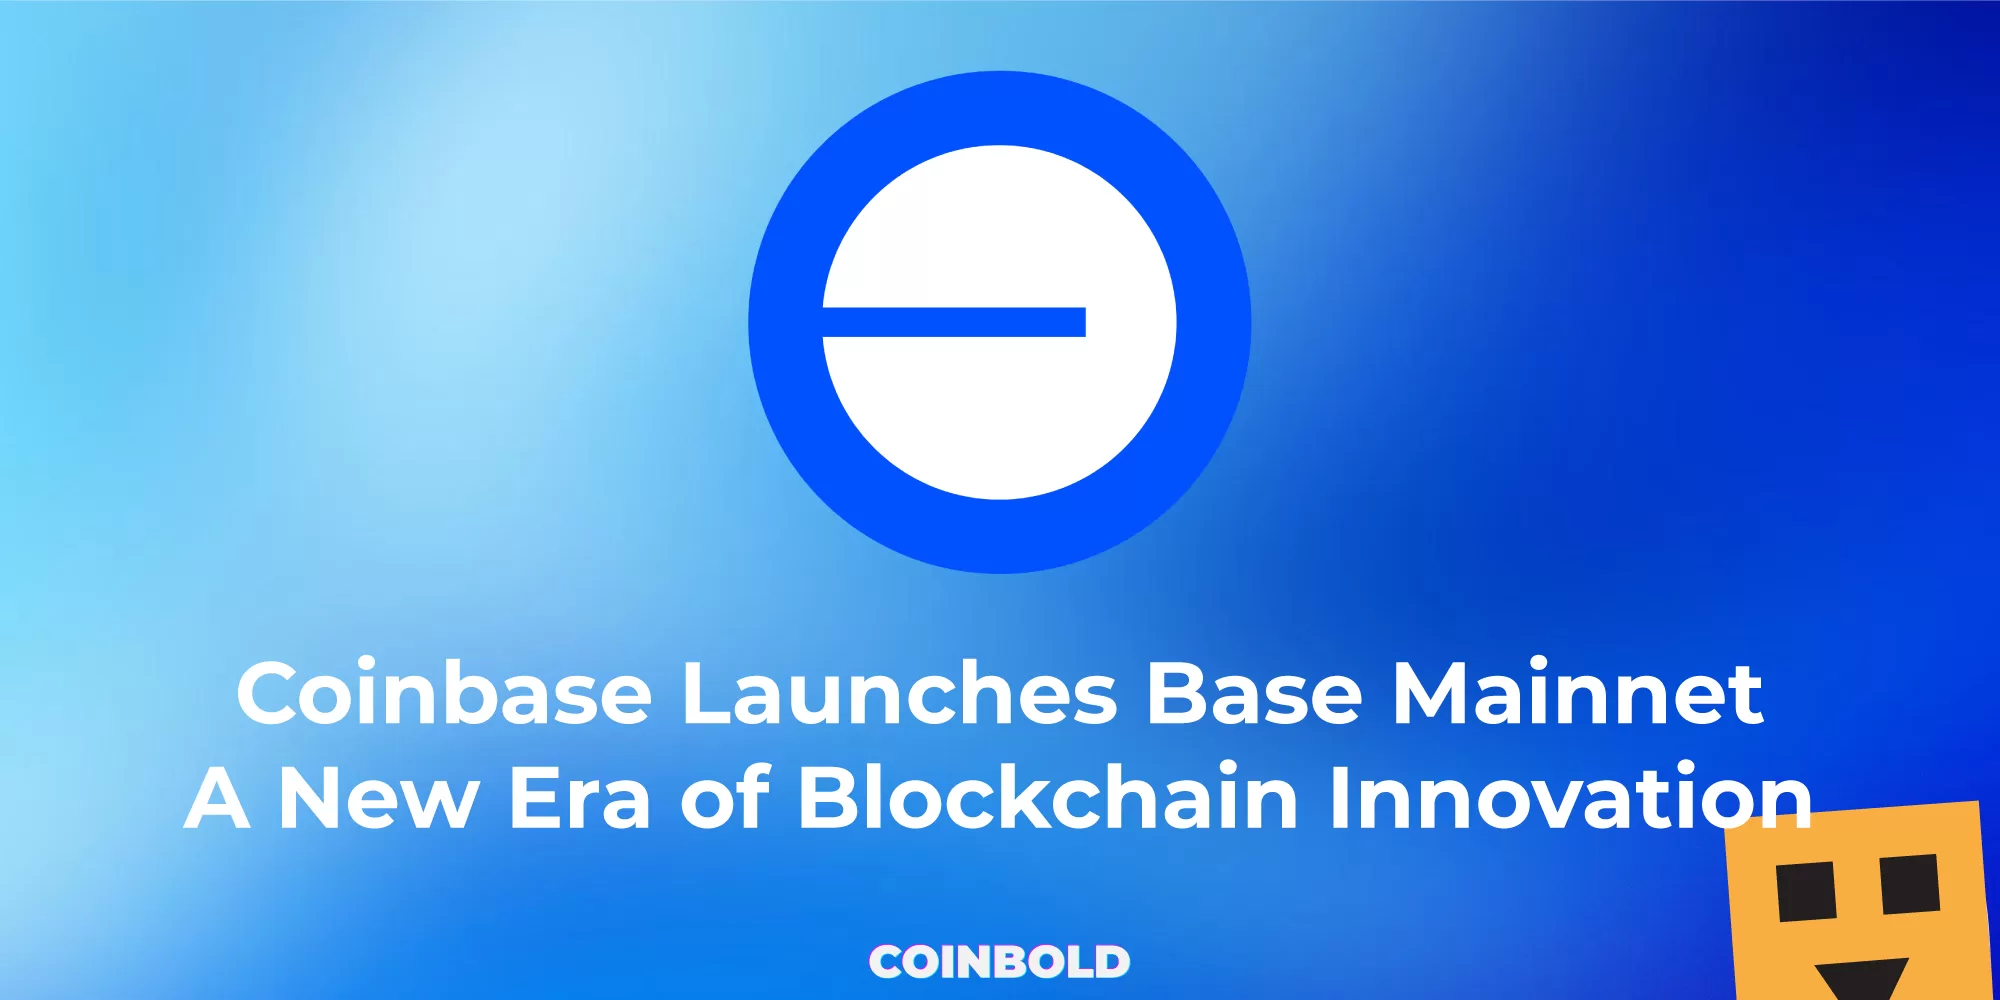 Coinbase Launches Base Mainnet A New Era of Blockchain Innovation